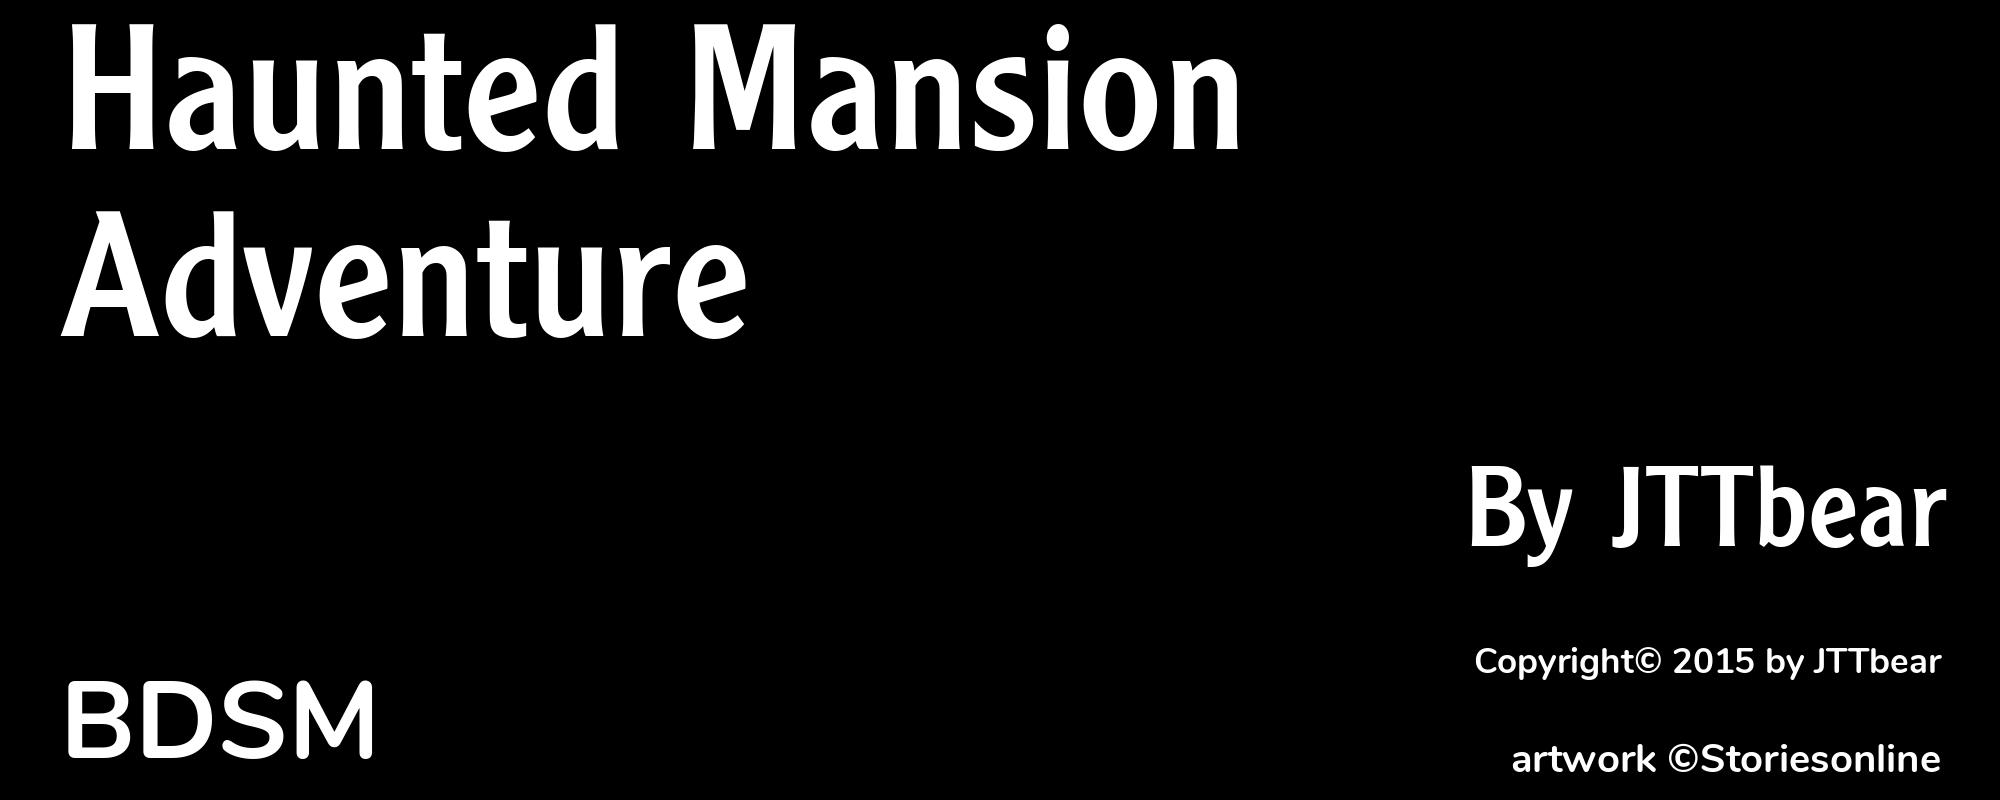 Haunted Mansion Adventure - Cover